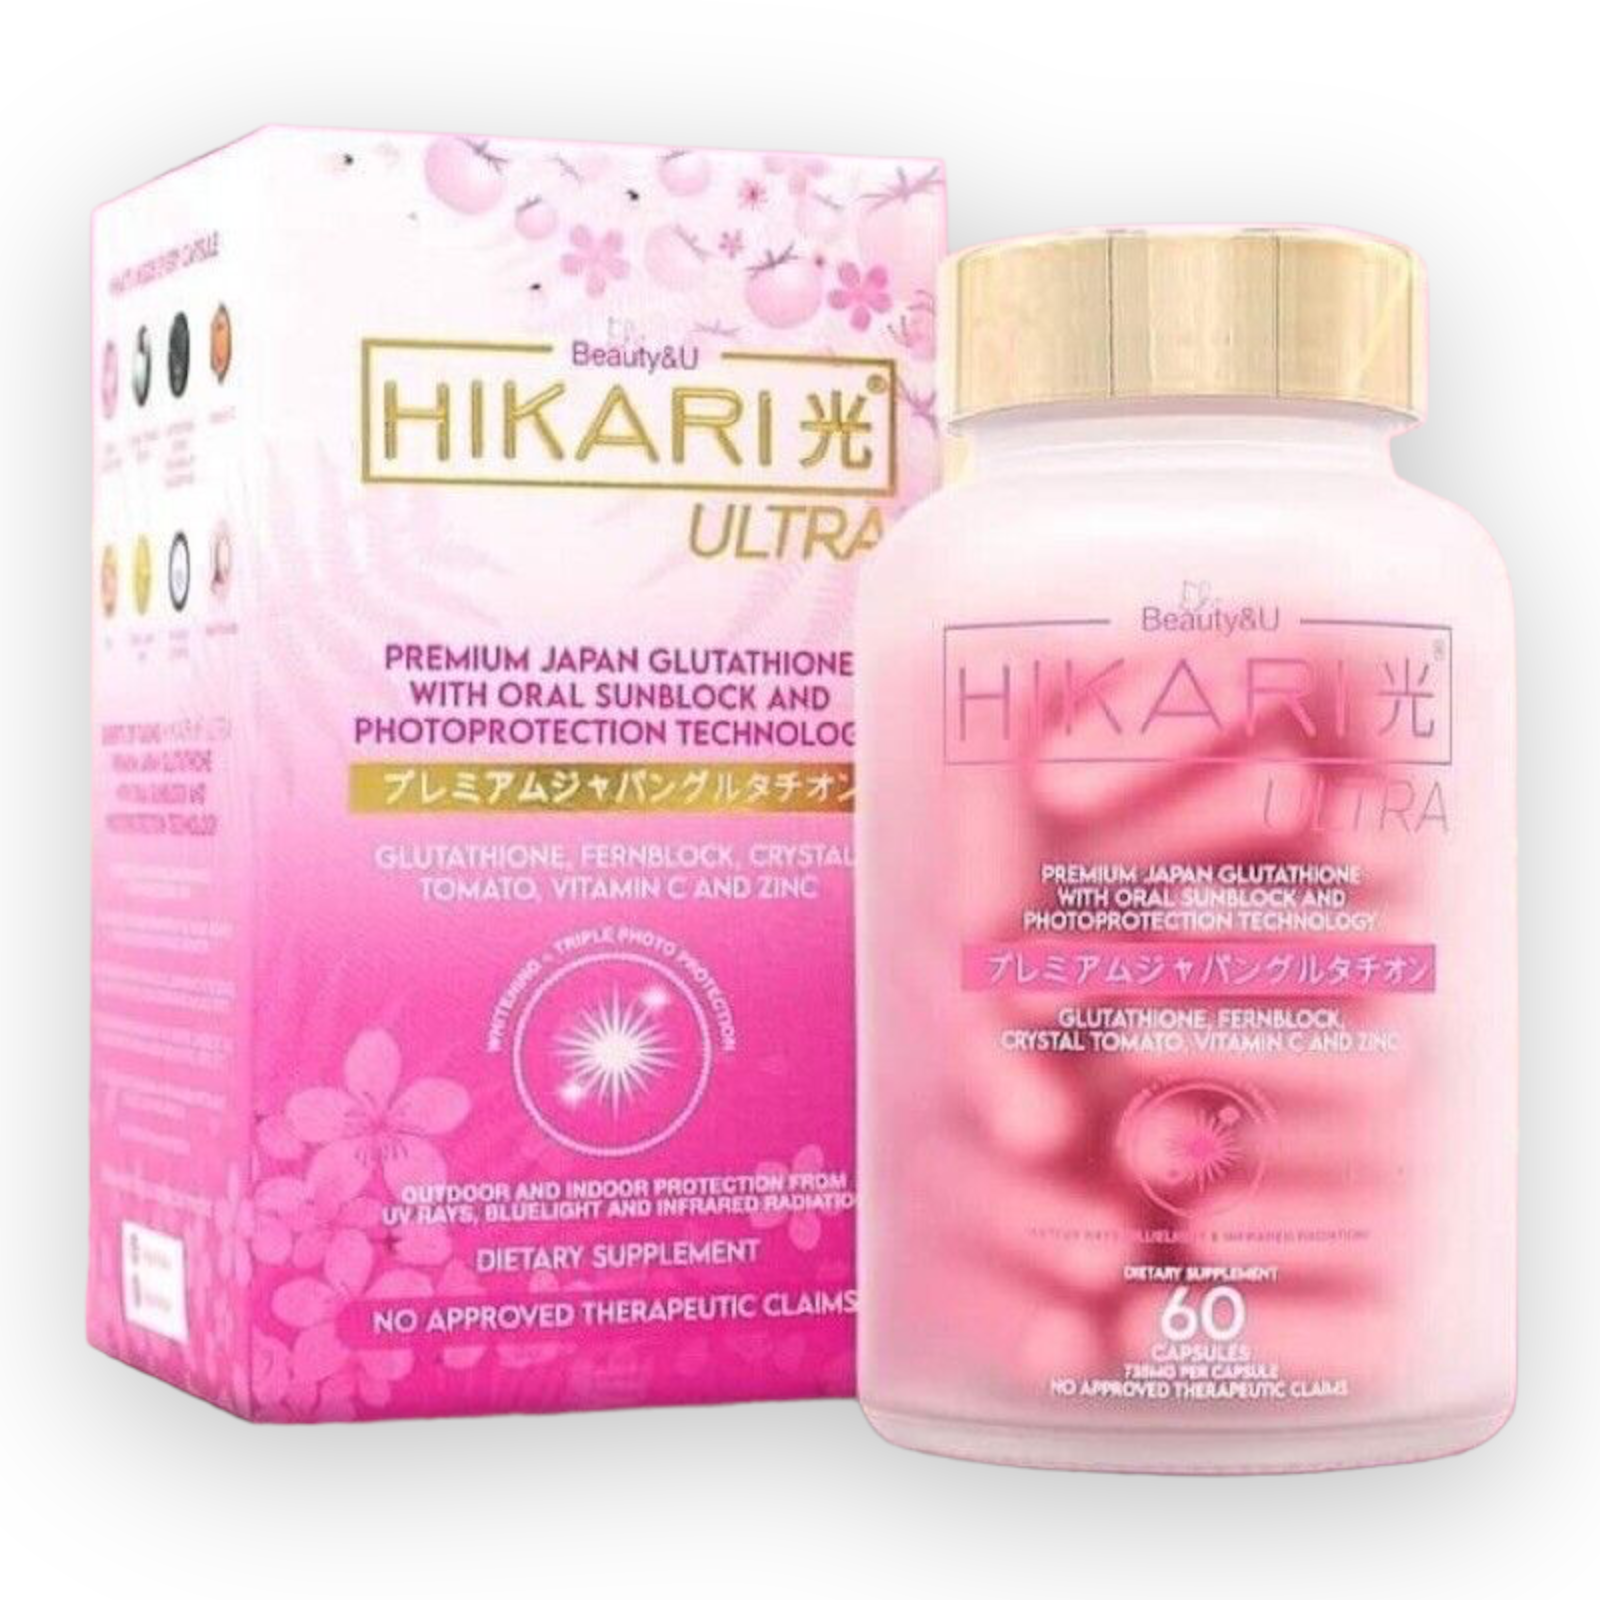 Hikari ULTRA Gluta Capsule | Premium Japan Glutathione with Oral Sunblock Technology - 60 caps